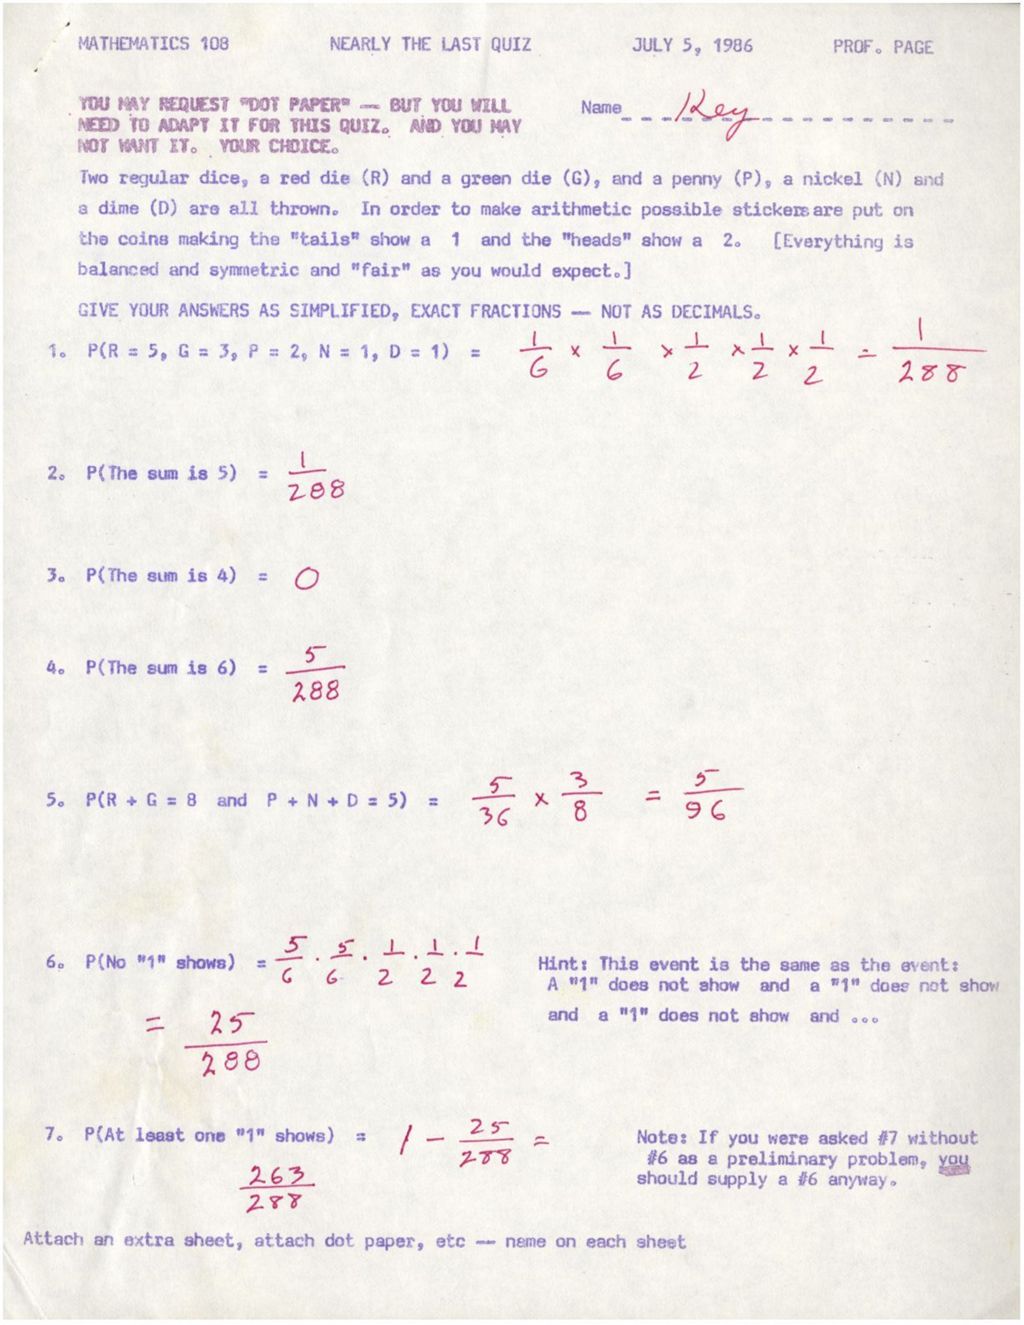 Math 108 Nearly Last Quiz (1986) (probability) w/ Answer Key